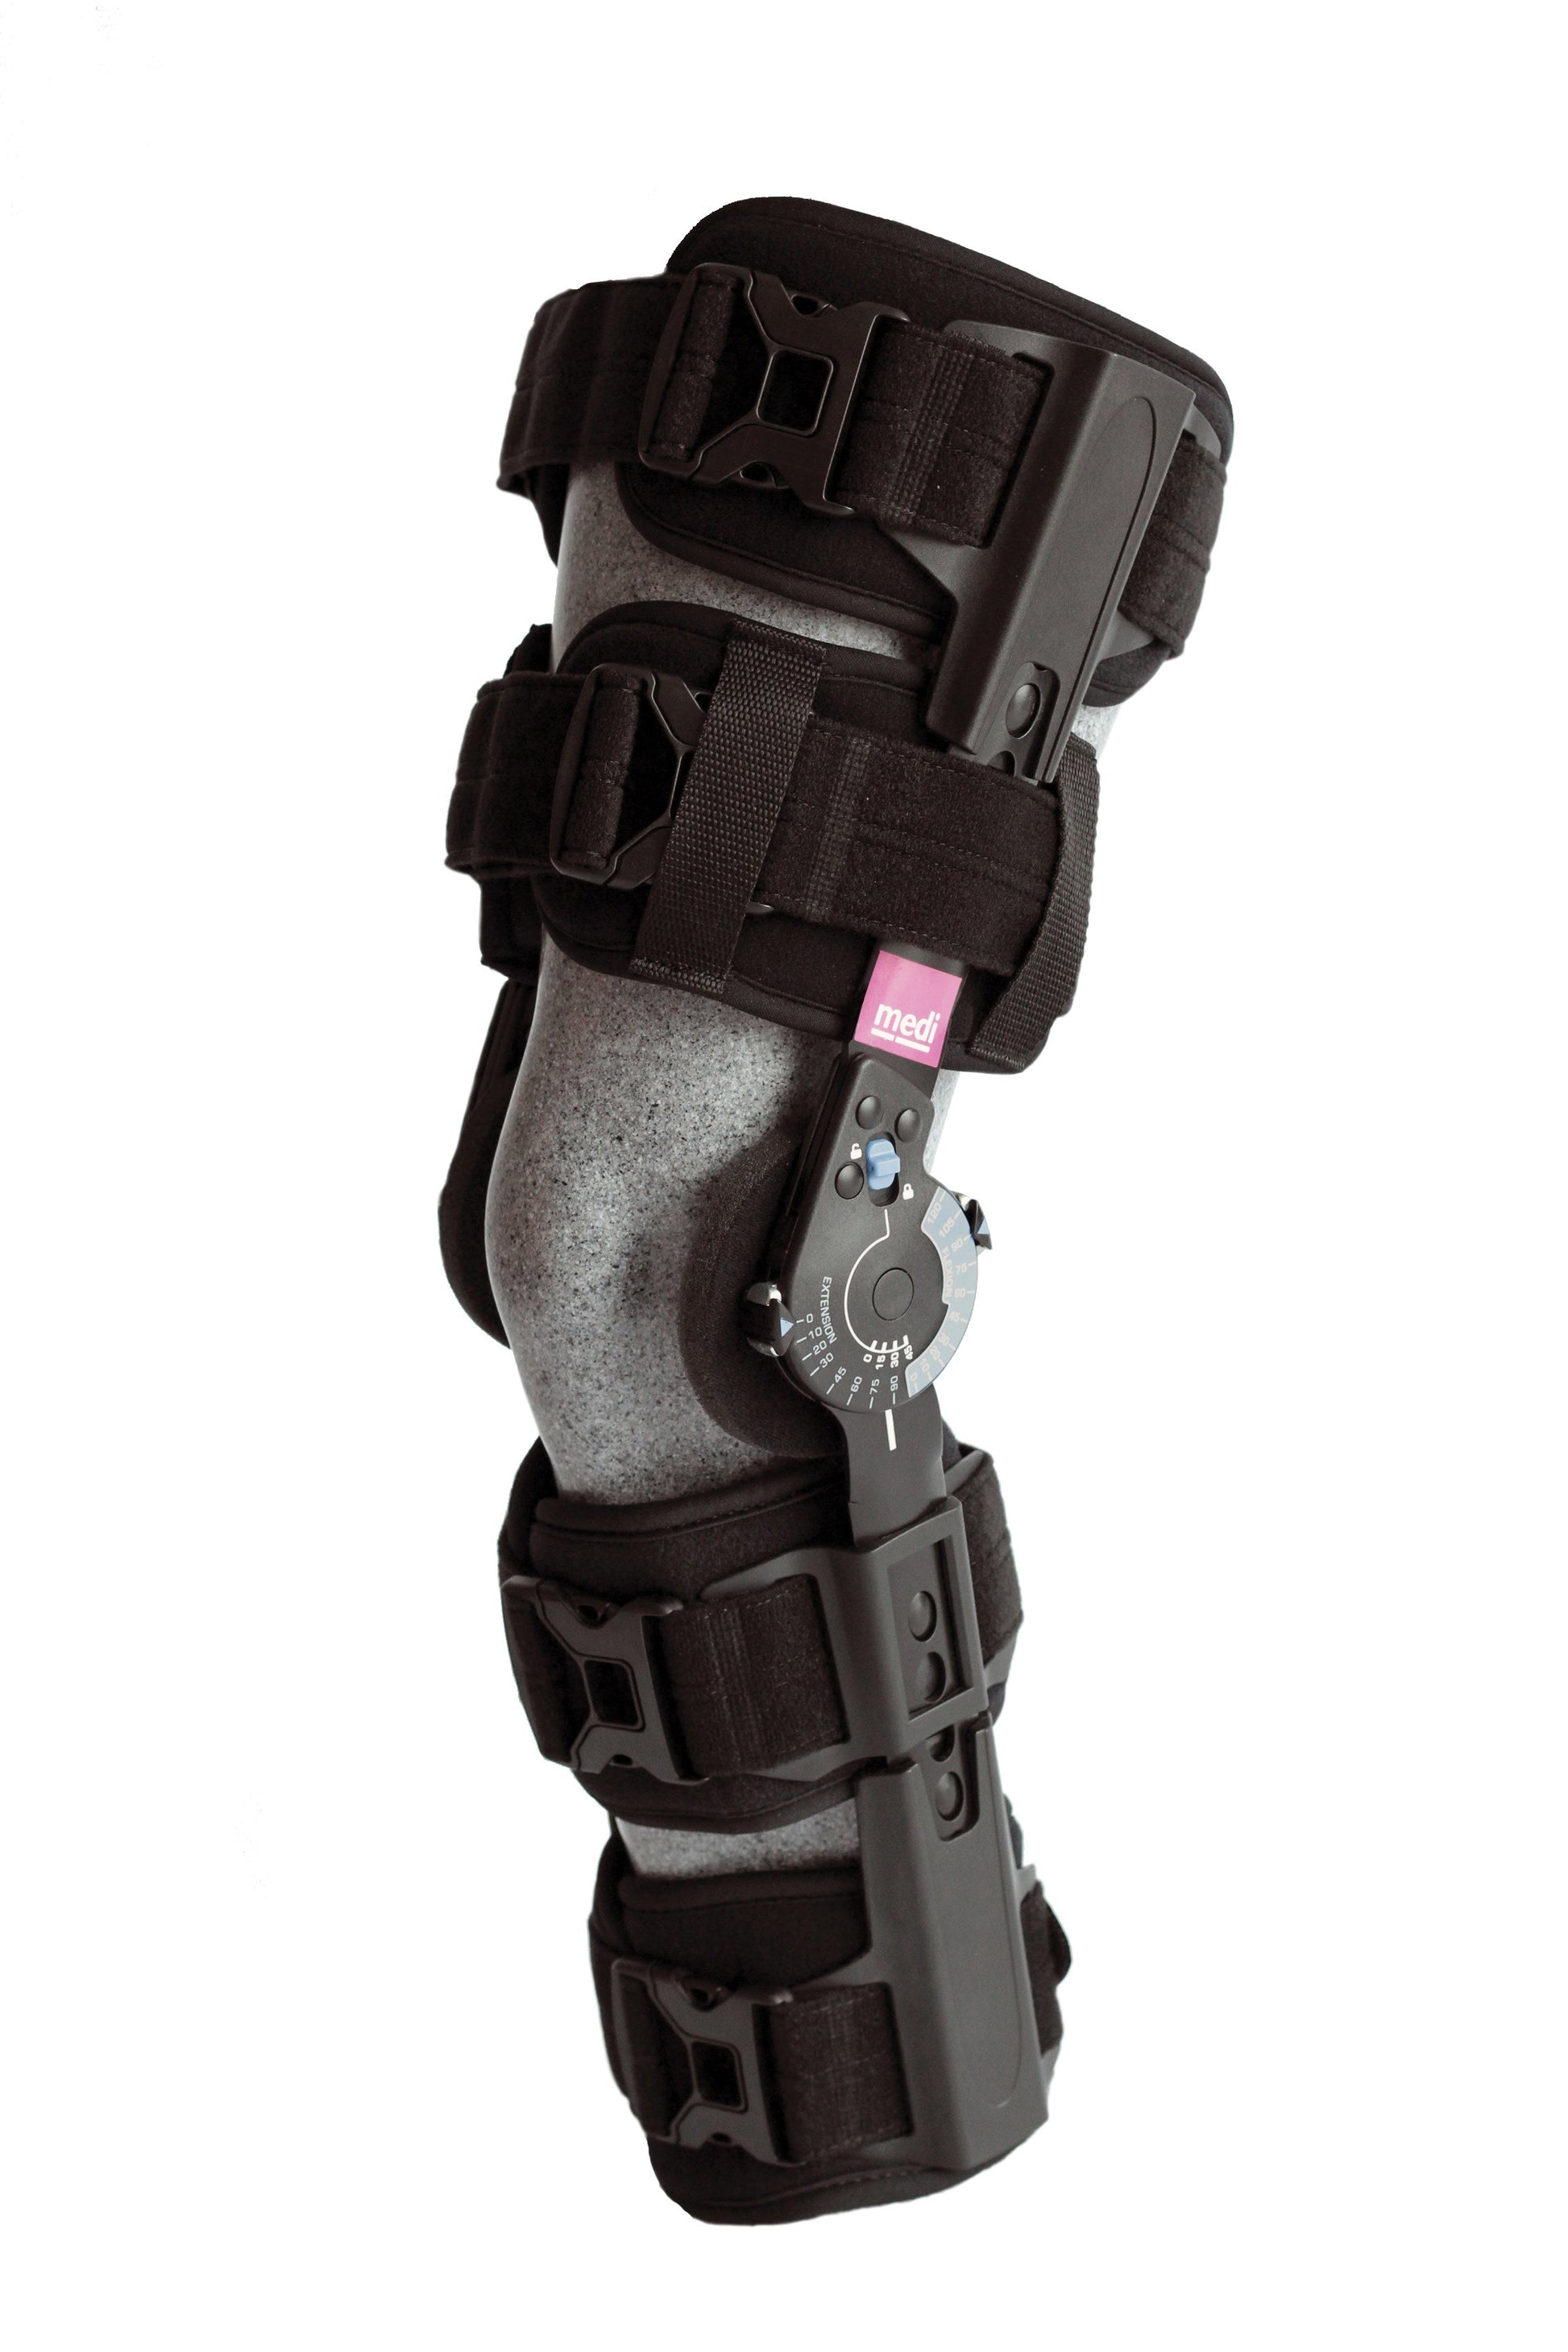 Medibot Hinged Knee Brace ROM Adjustable Post Op Knee India